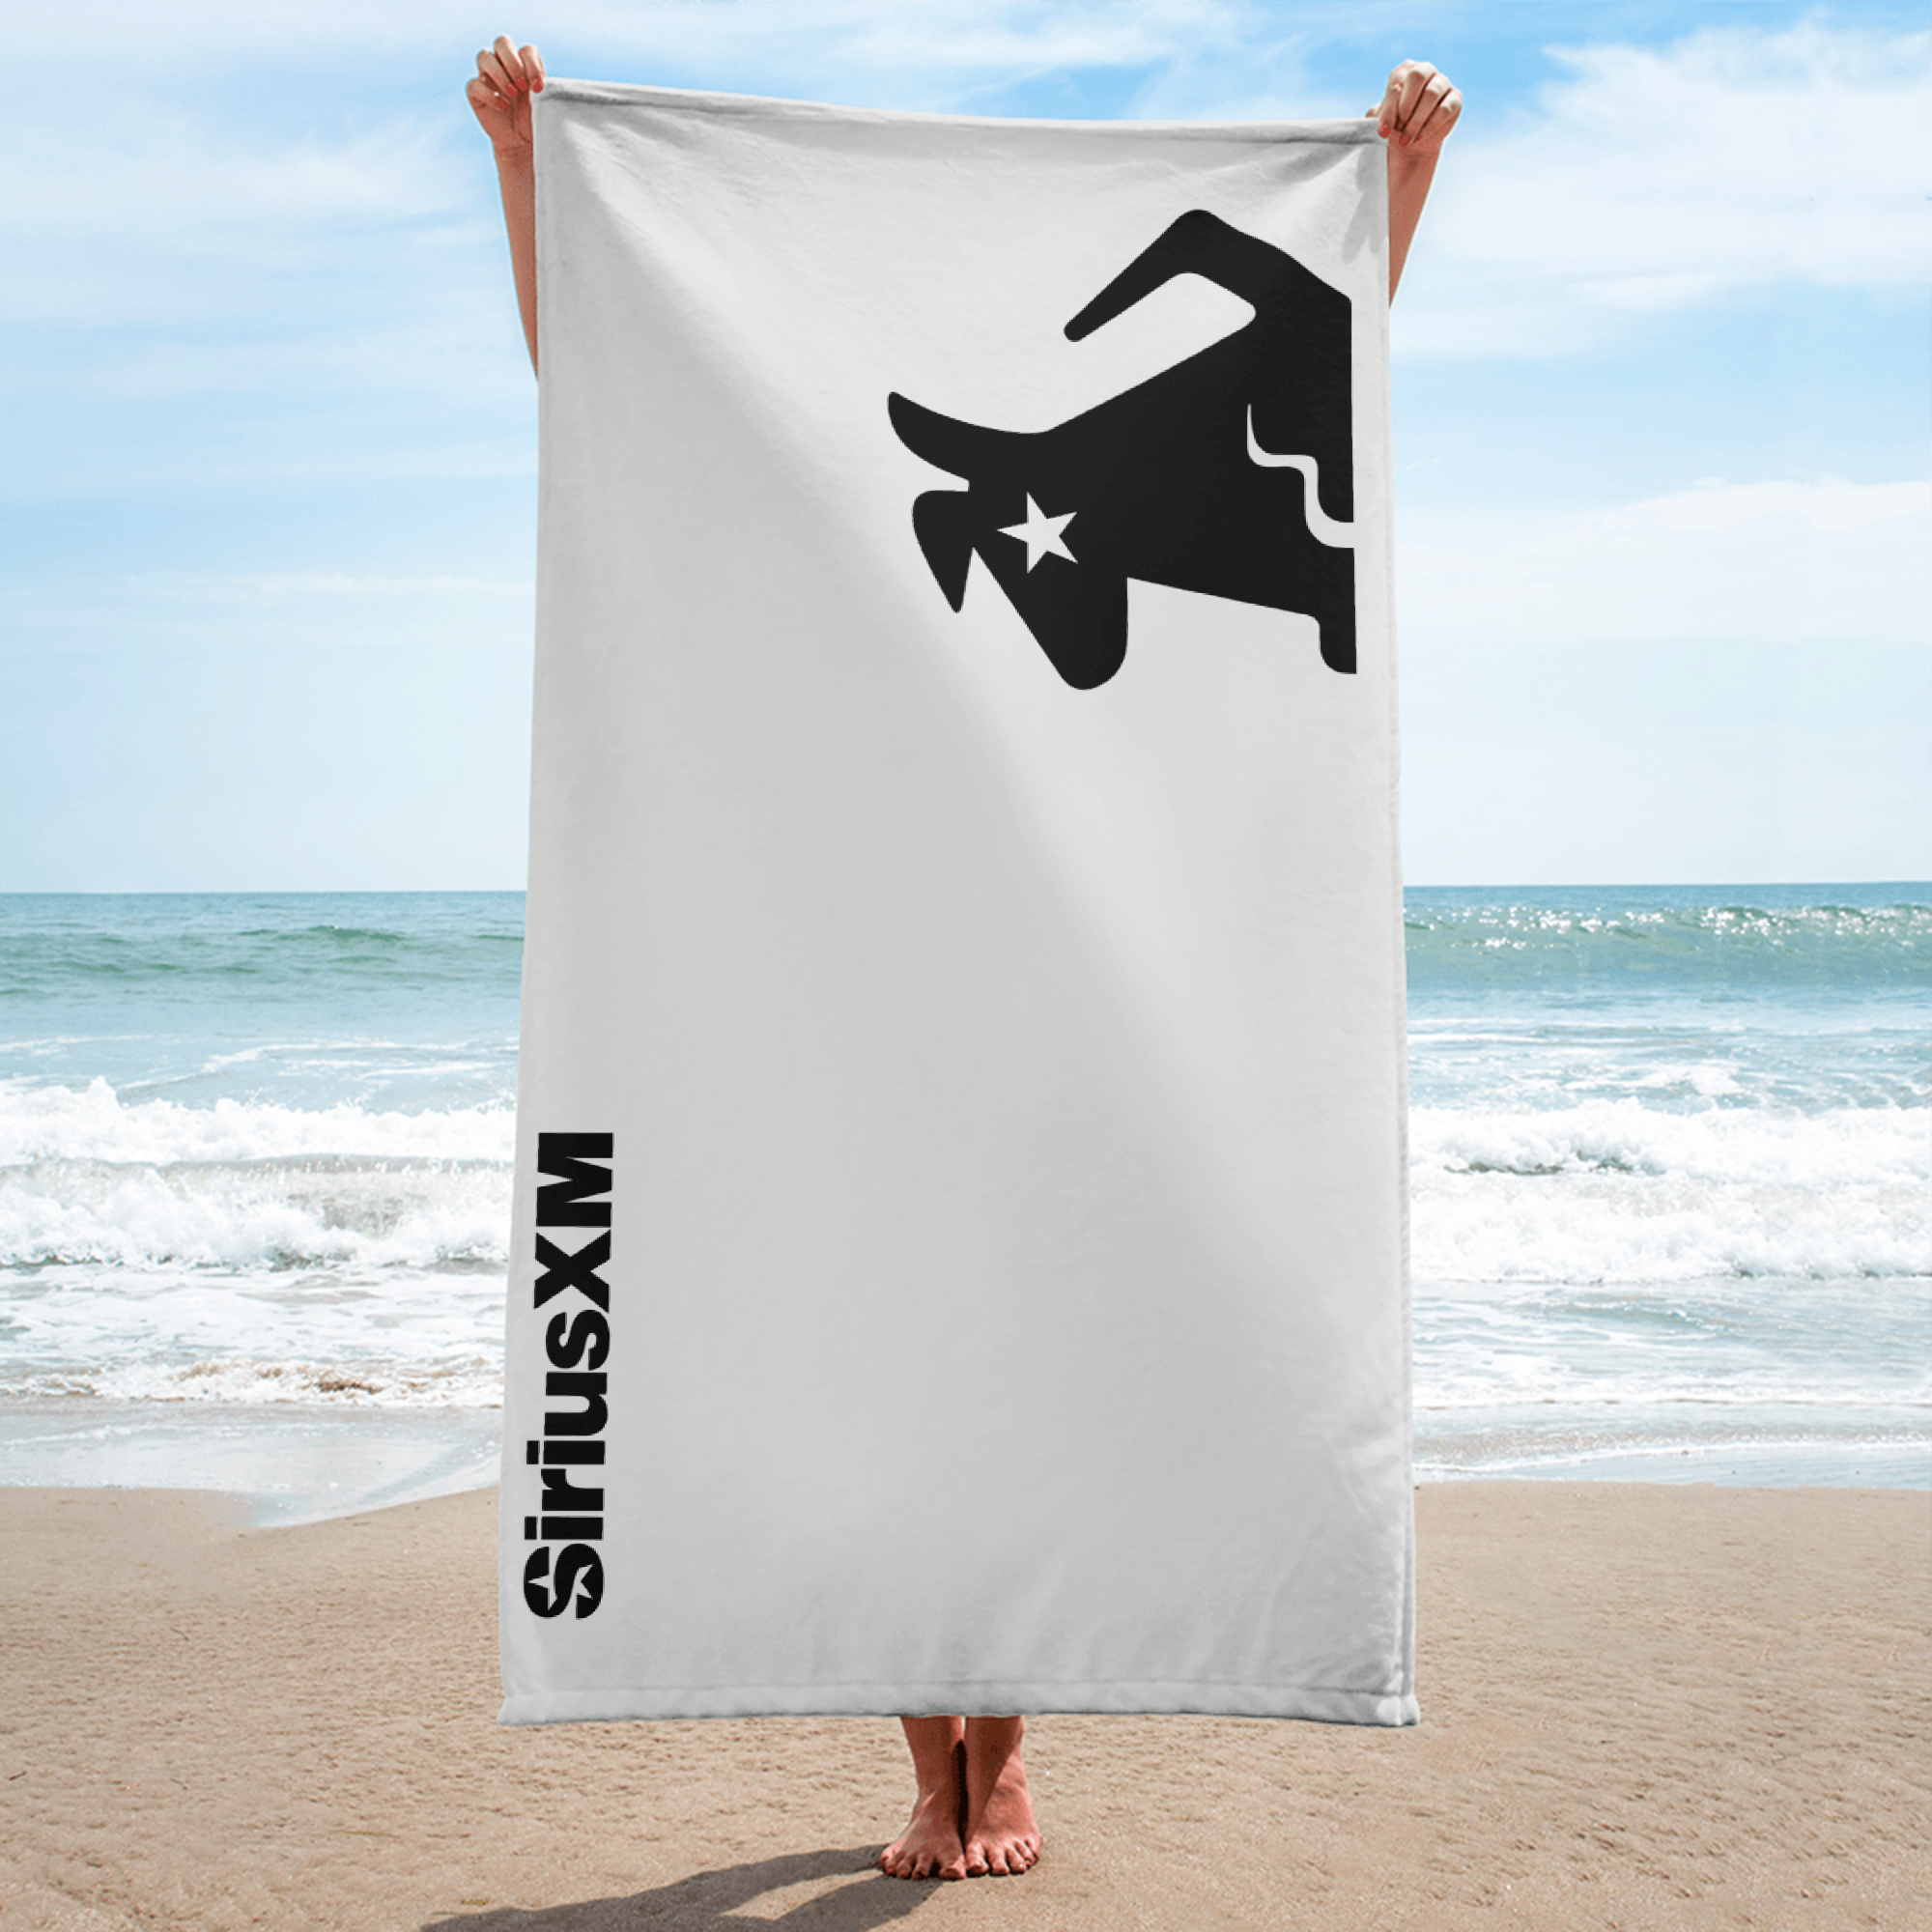 SiriusXM: Next Gen Black Stella Towel